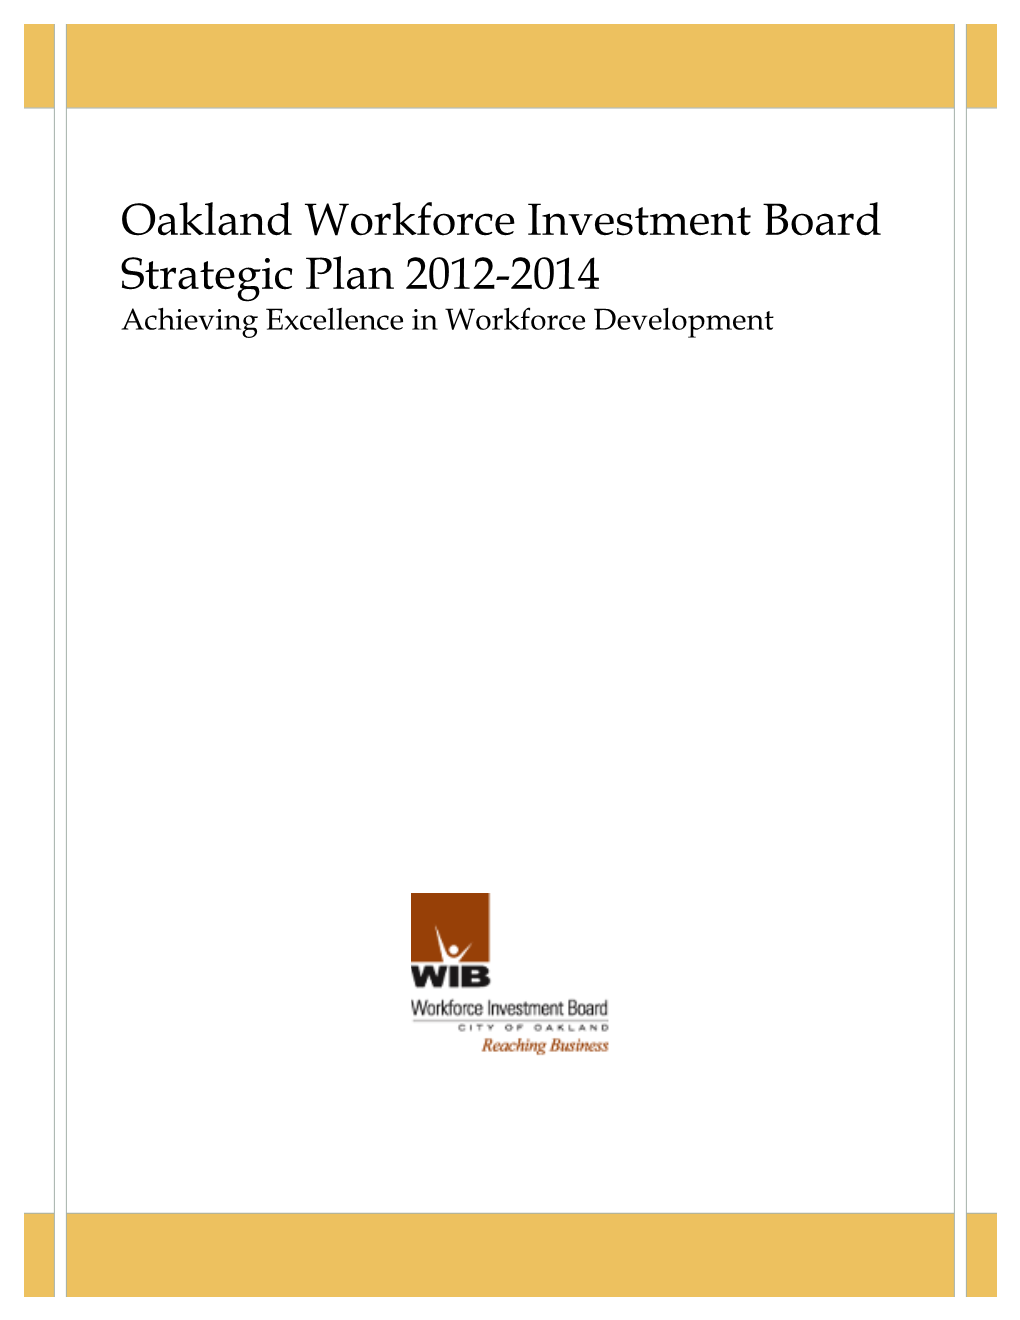 Oakland Workforce Investment Board Strategic Plan 2012-2014 Achieving Excellence in Workforce Development